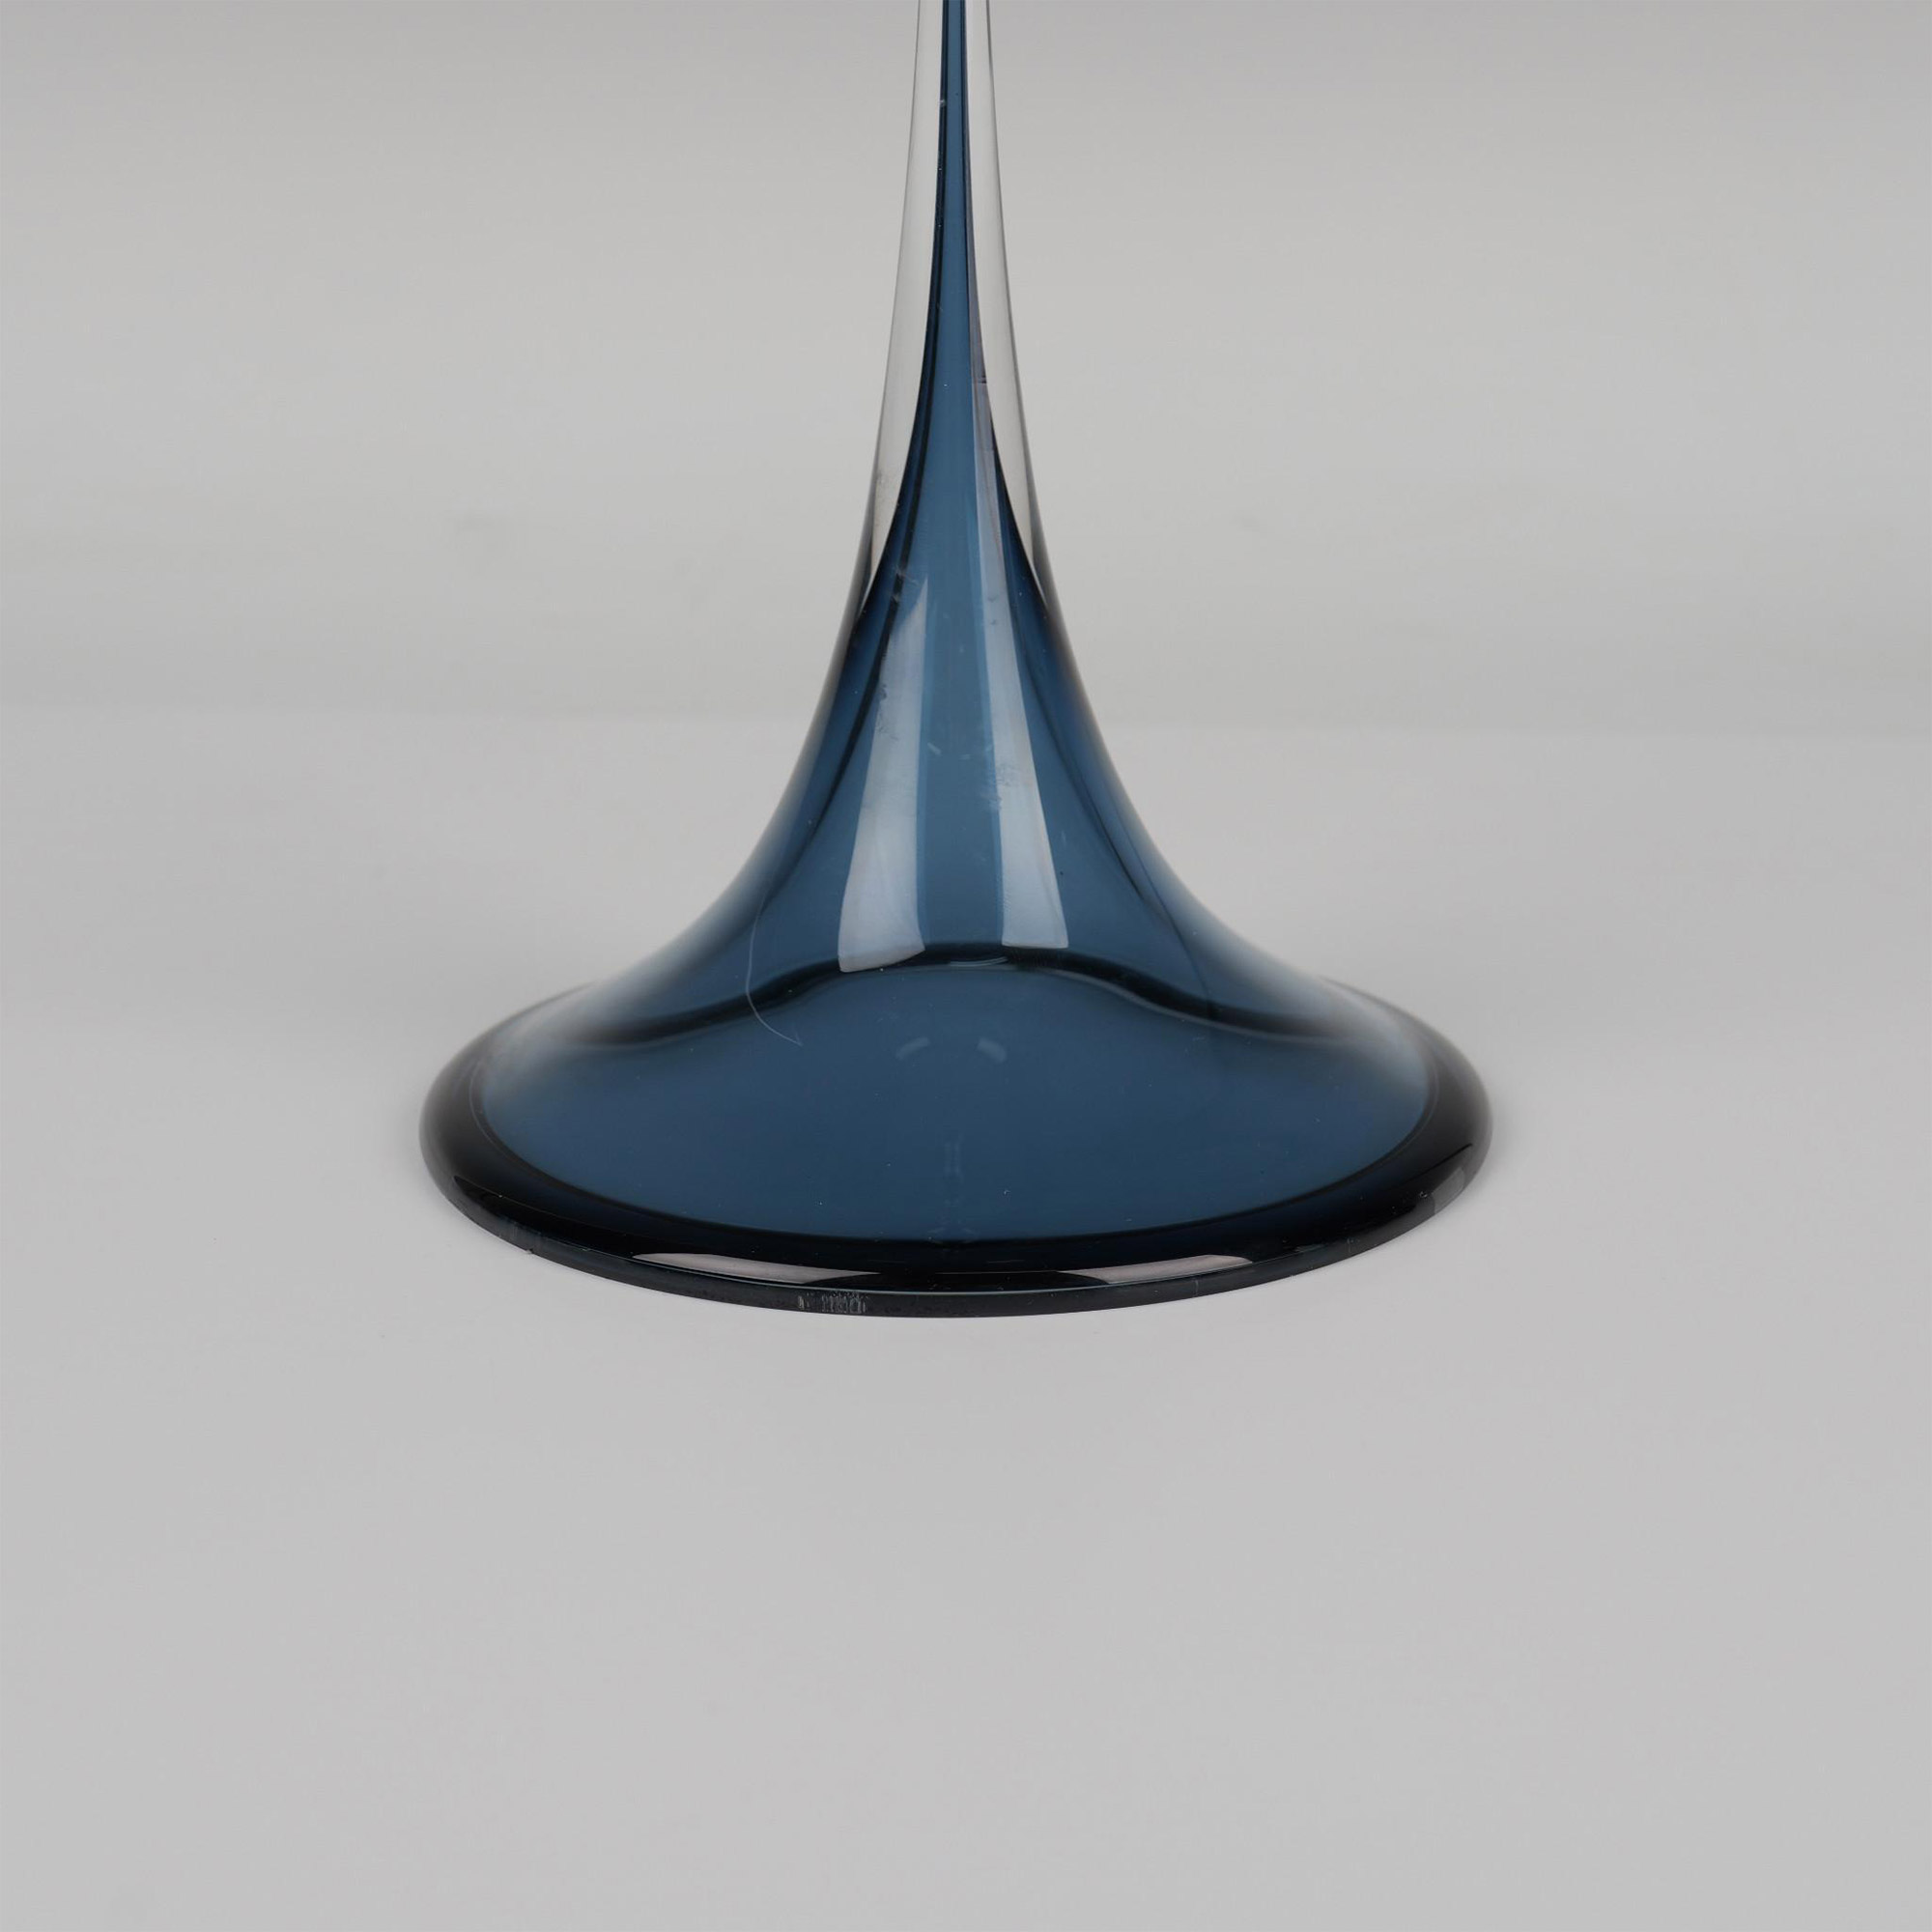 Orrefors by Nils Landberg Tulpan Vase - Image 3 of 6